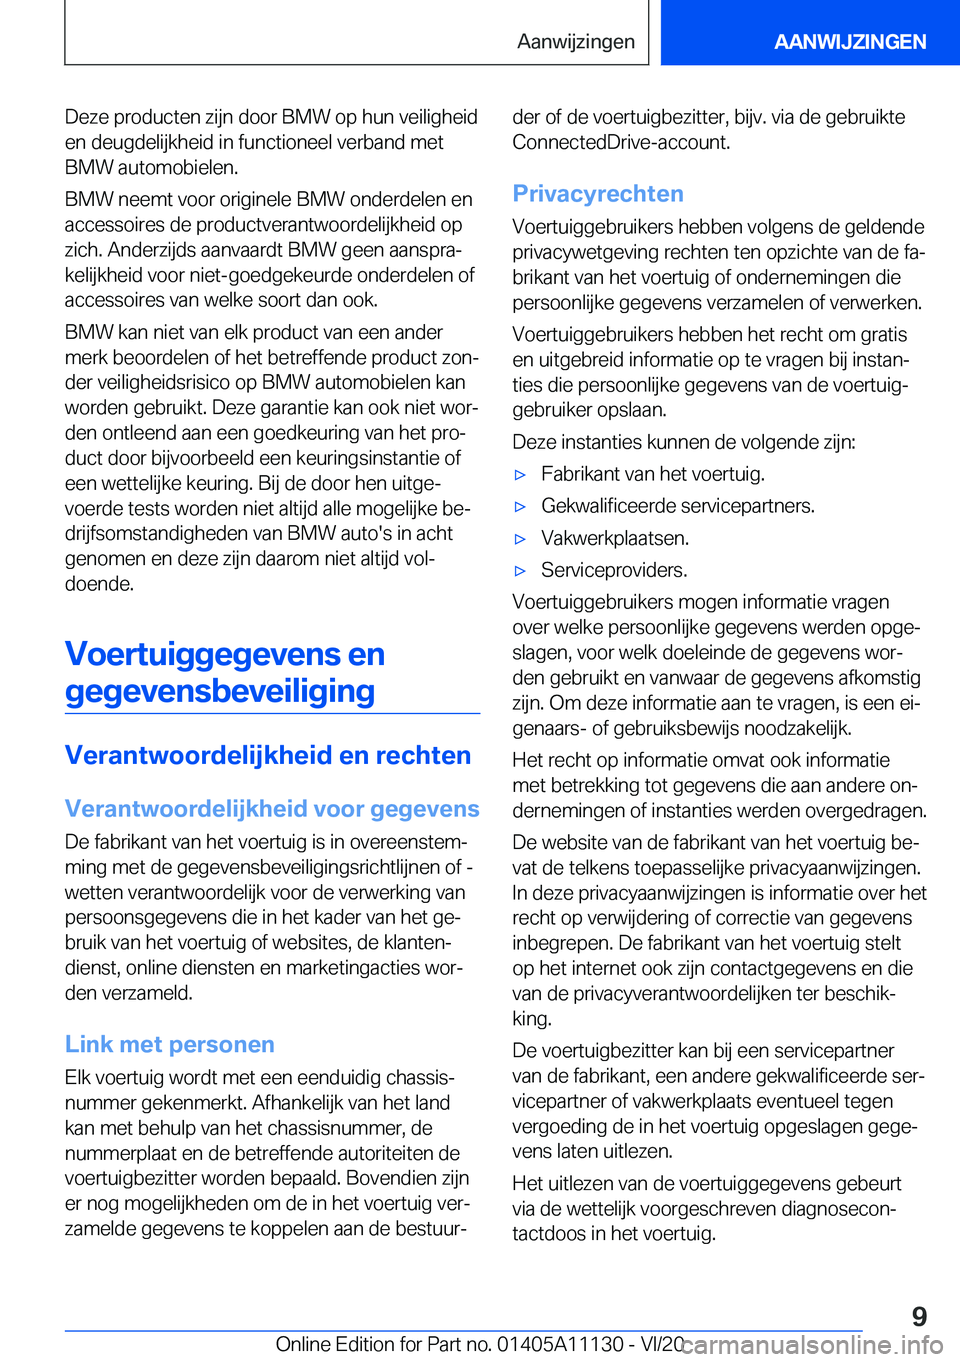 BMW 8 SERIES COUPE 2021  Instructieboekjes (in Dutch) �D�e�z�e��p�r�o�d�u�c�t�e�n��z�i�j�n��d�o�o�r��B�M�W��o�p��h�u�n��v�e�i�l�i�g�h�e�i�d�e�n��d�e�u�g�d�e�l�i�j�k�h�e�i�d��i�n��f�u�n�c�t�i�o�n�e�e�l��v�e�r�b�a�n�d��m�e�t�B�M�W��a�u�t�o�m�o